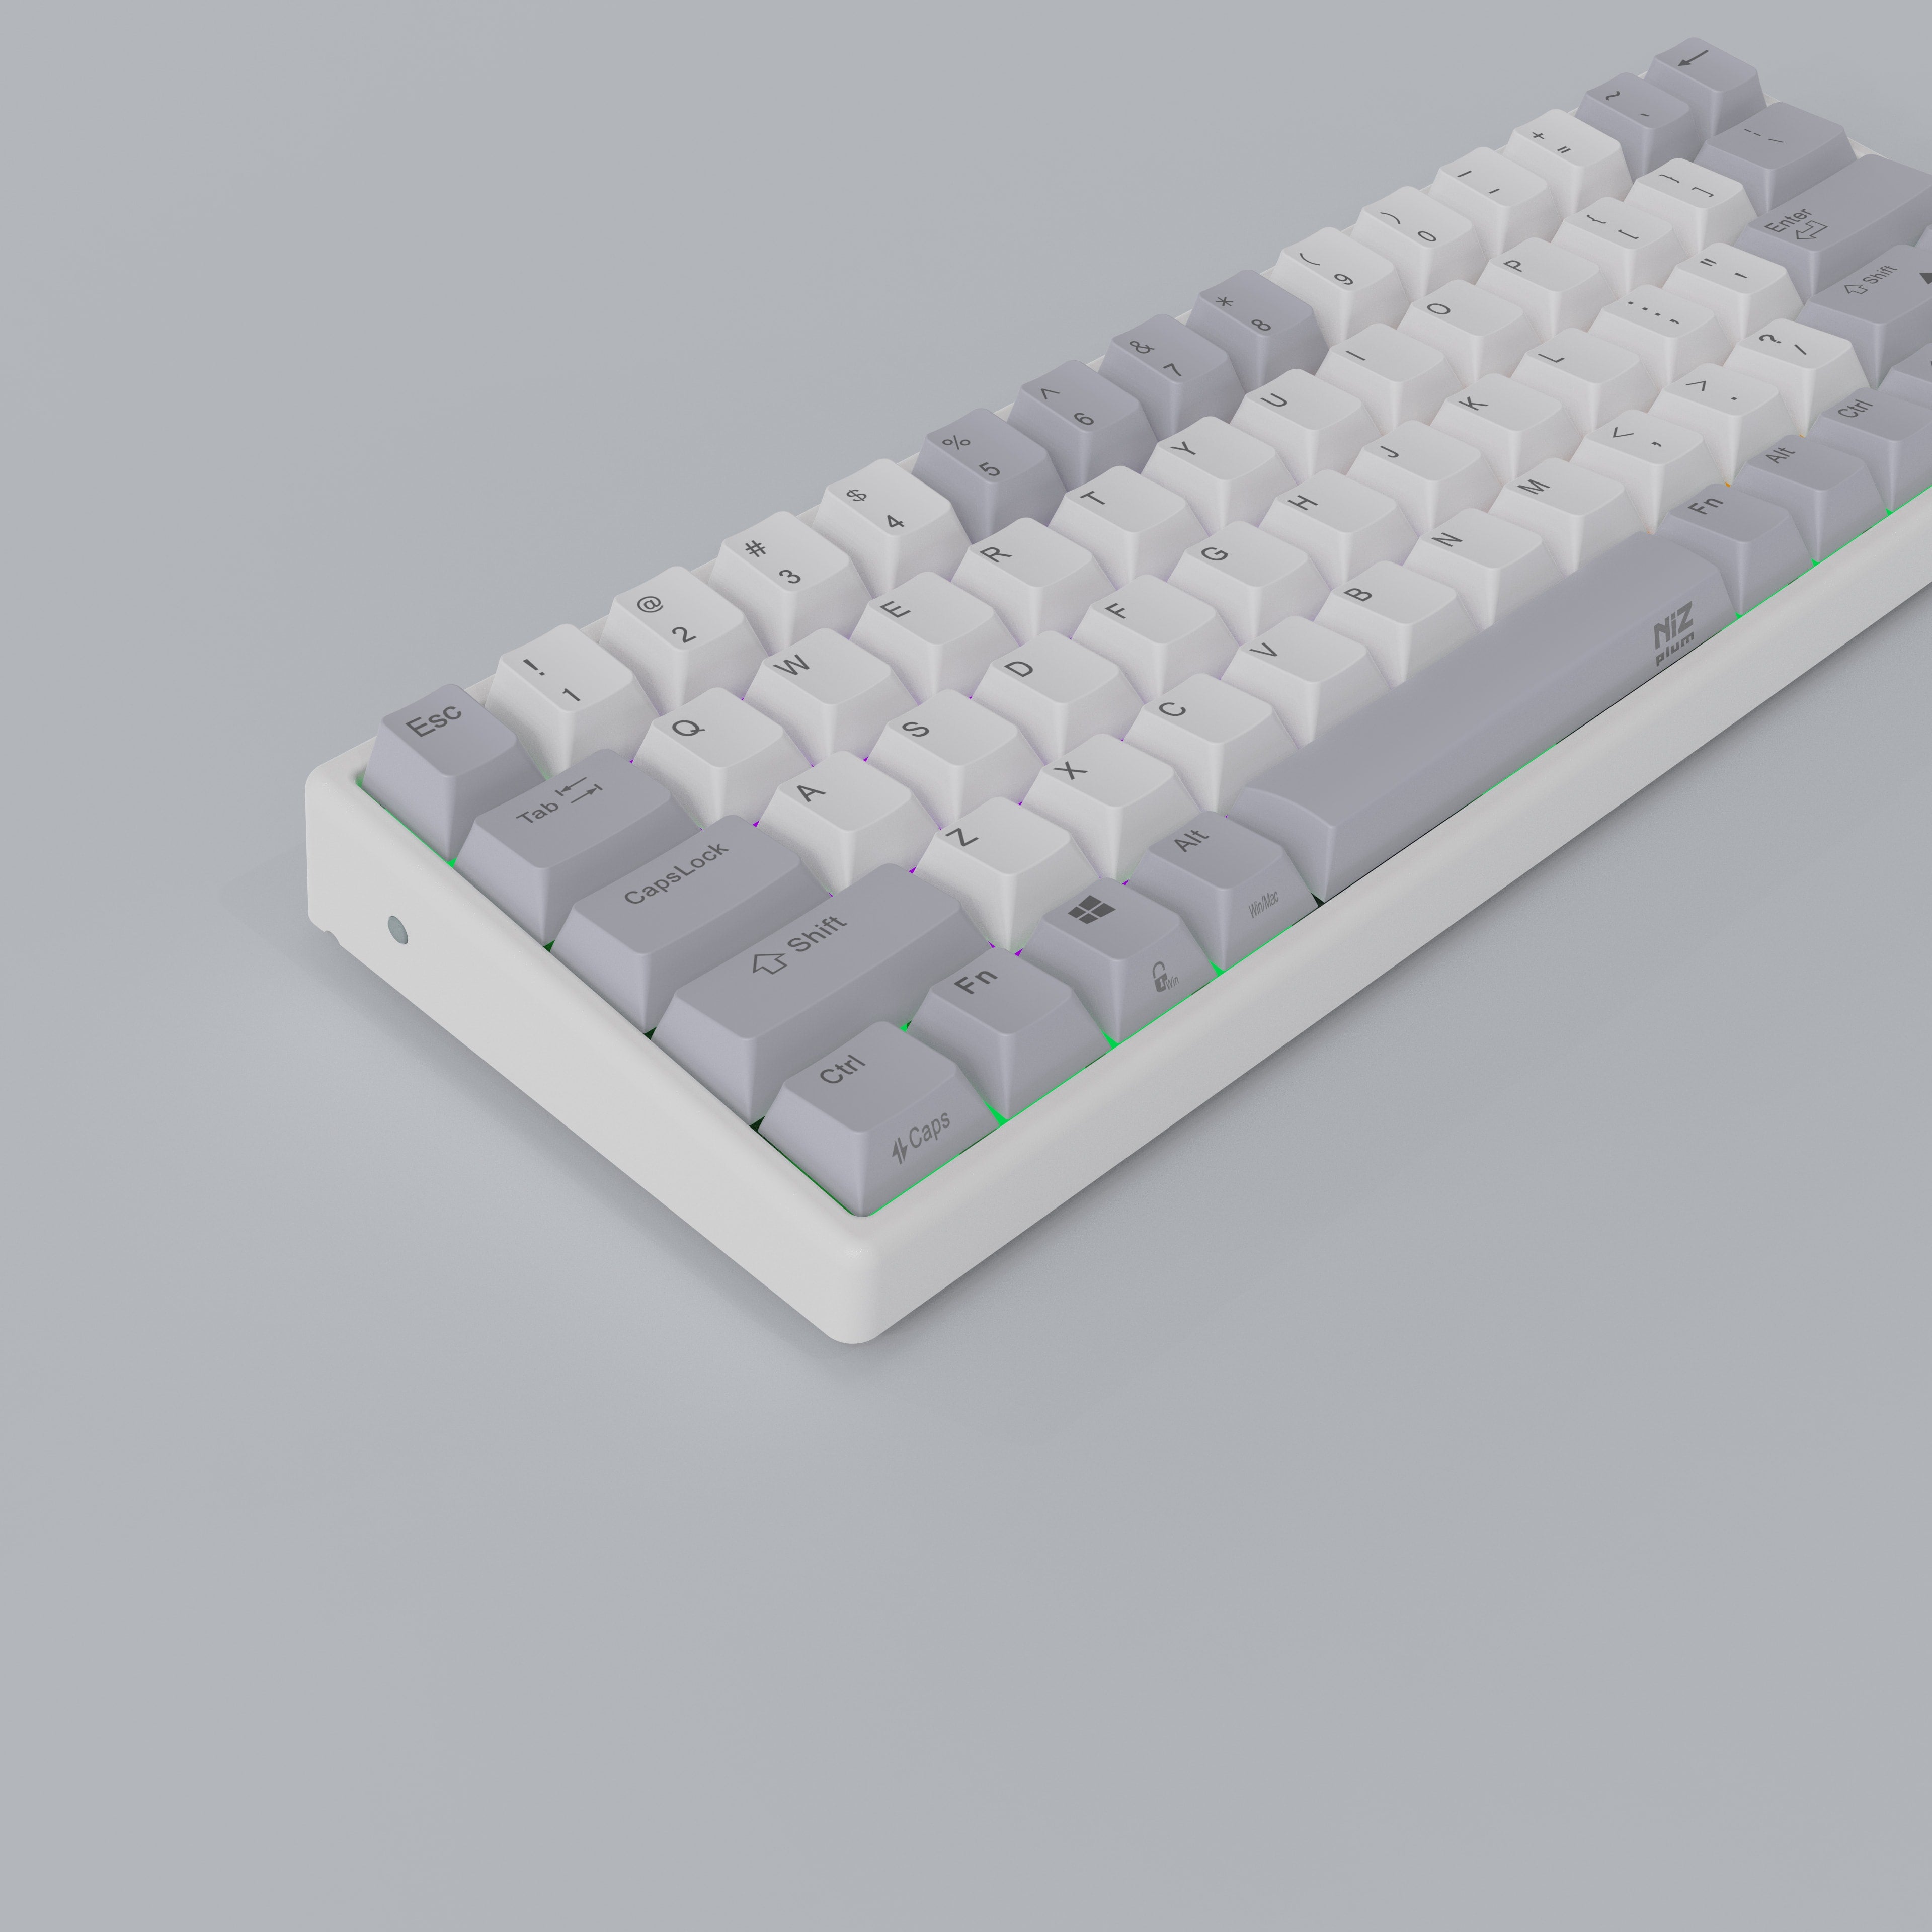 NIZ Keyboard ATOM 66 Capacitive Keyboard